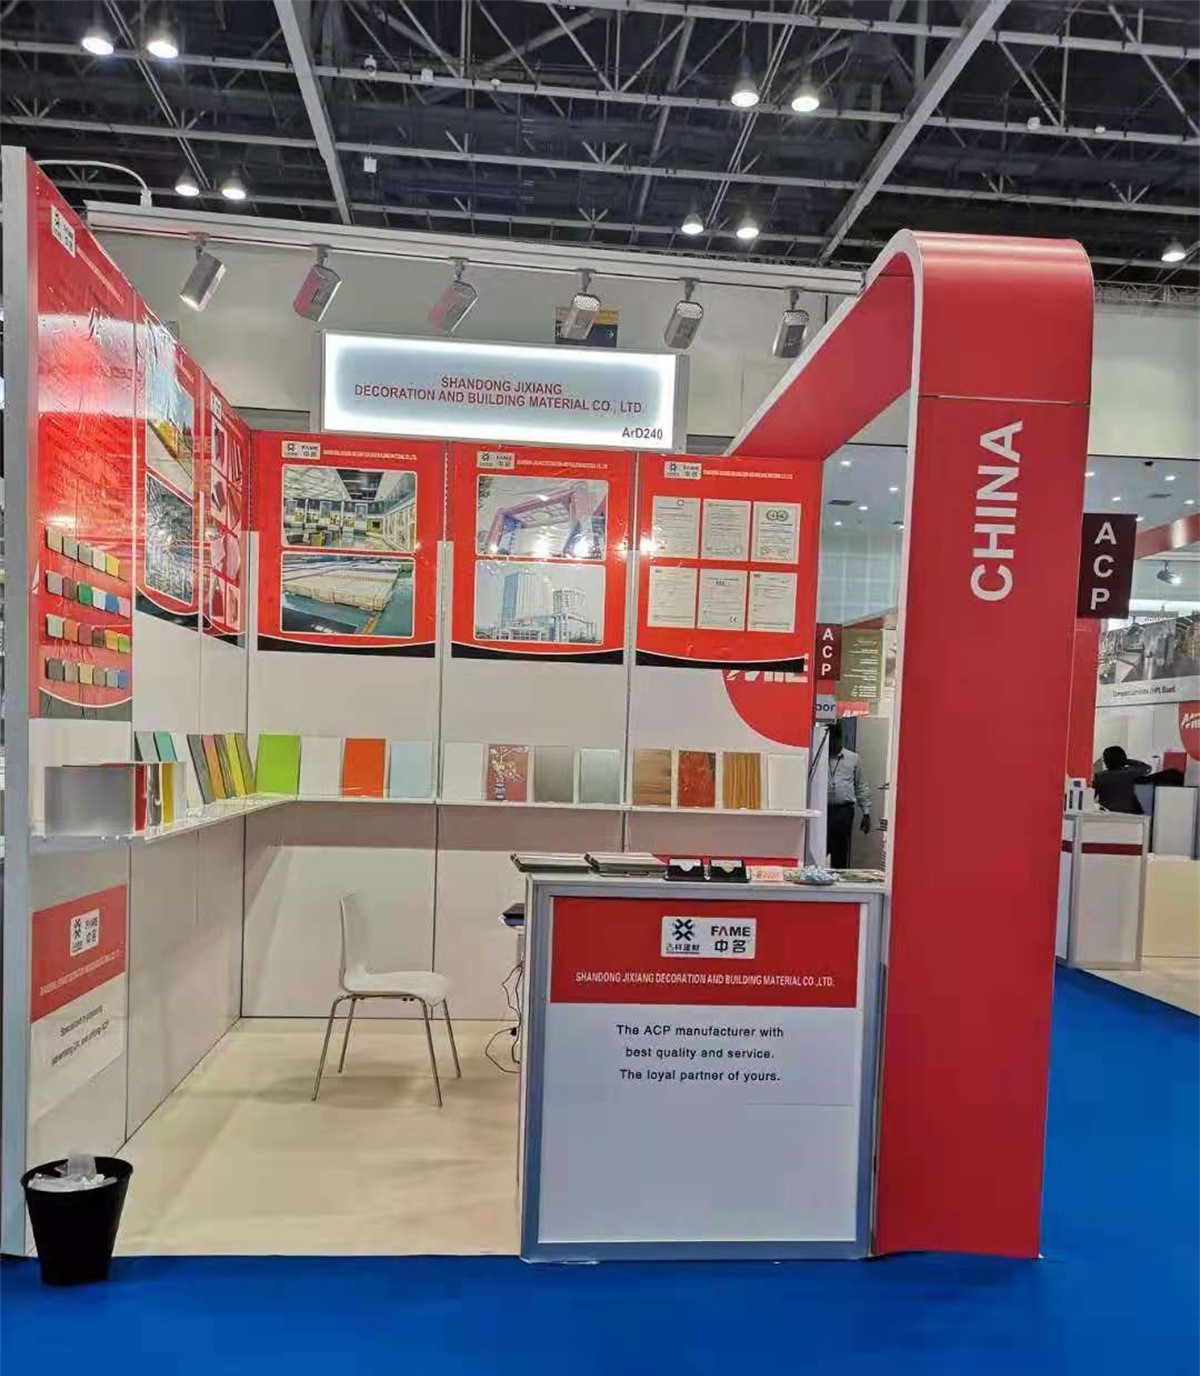 Dubai Big 5 Building Material Exhibition 2019.jpg